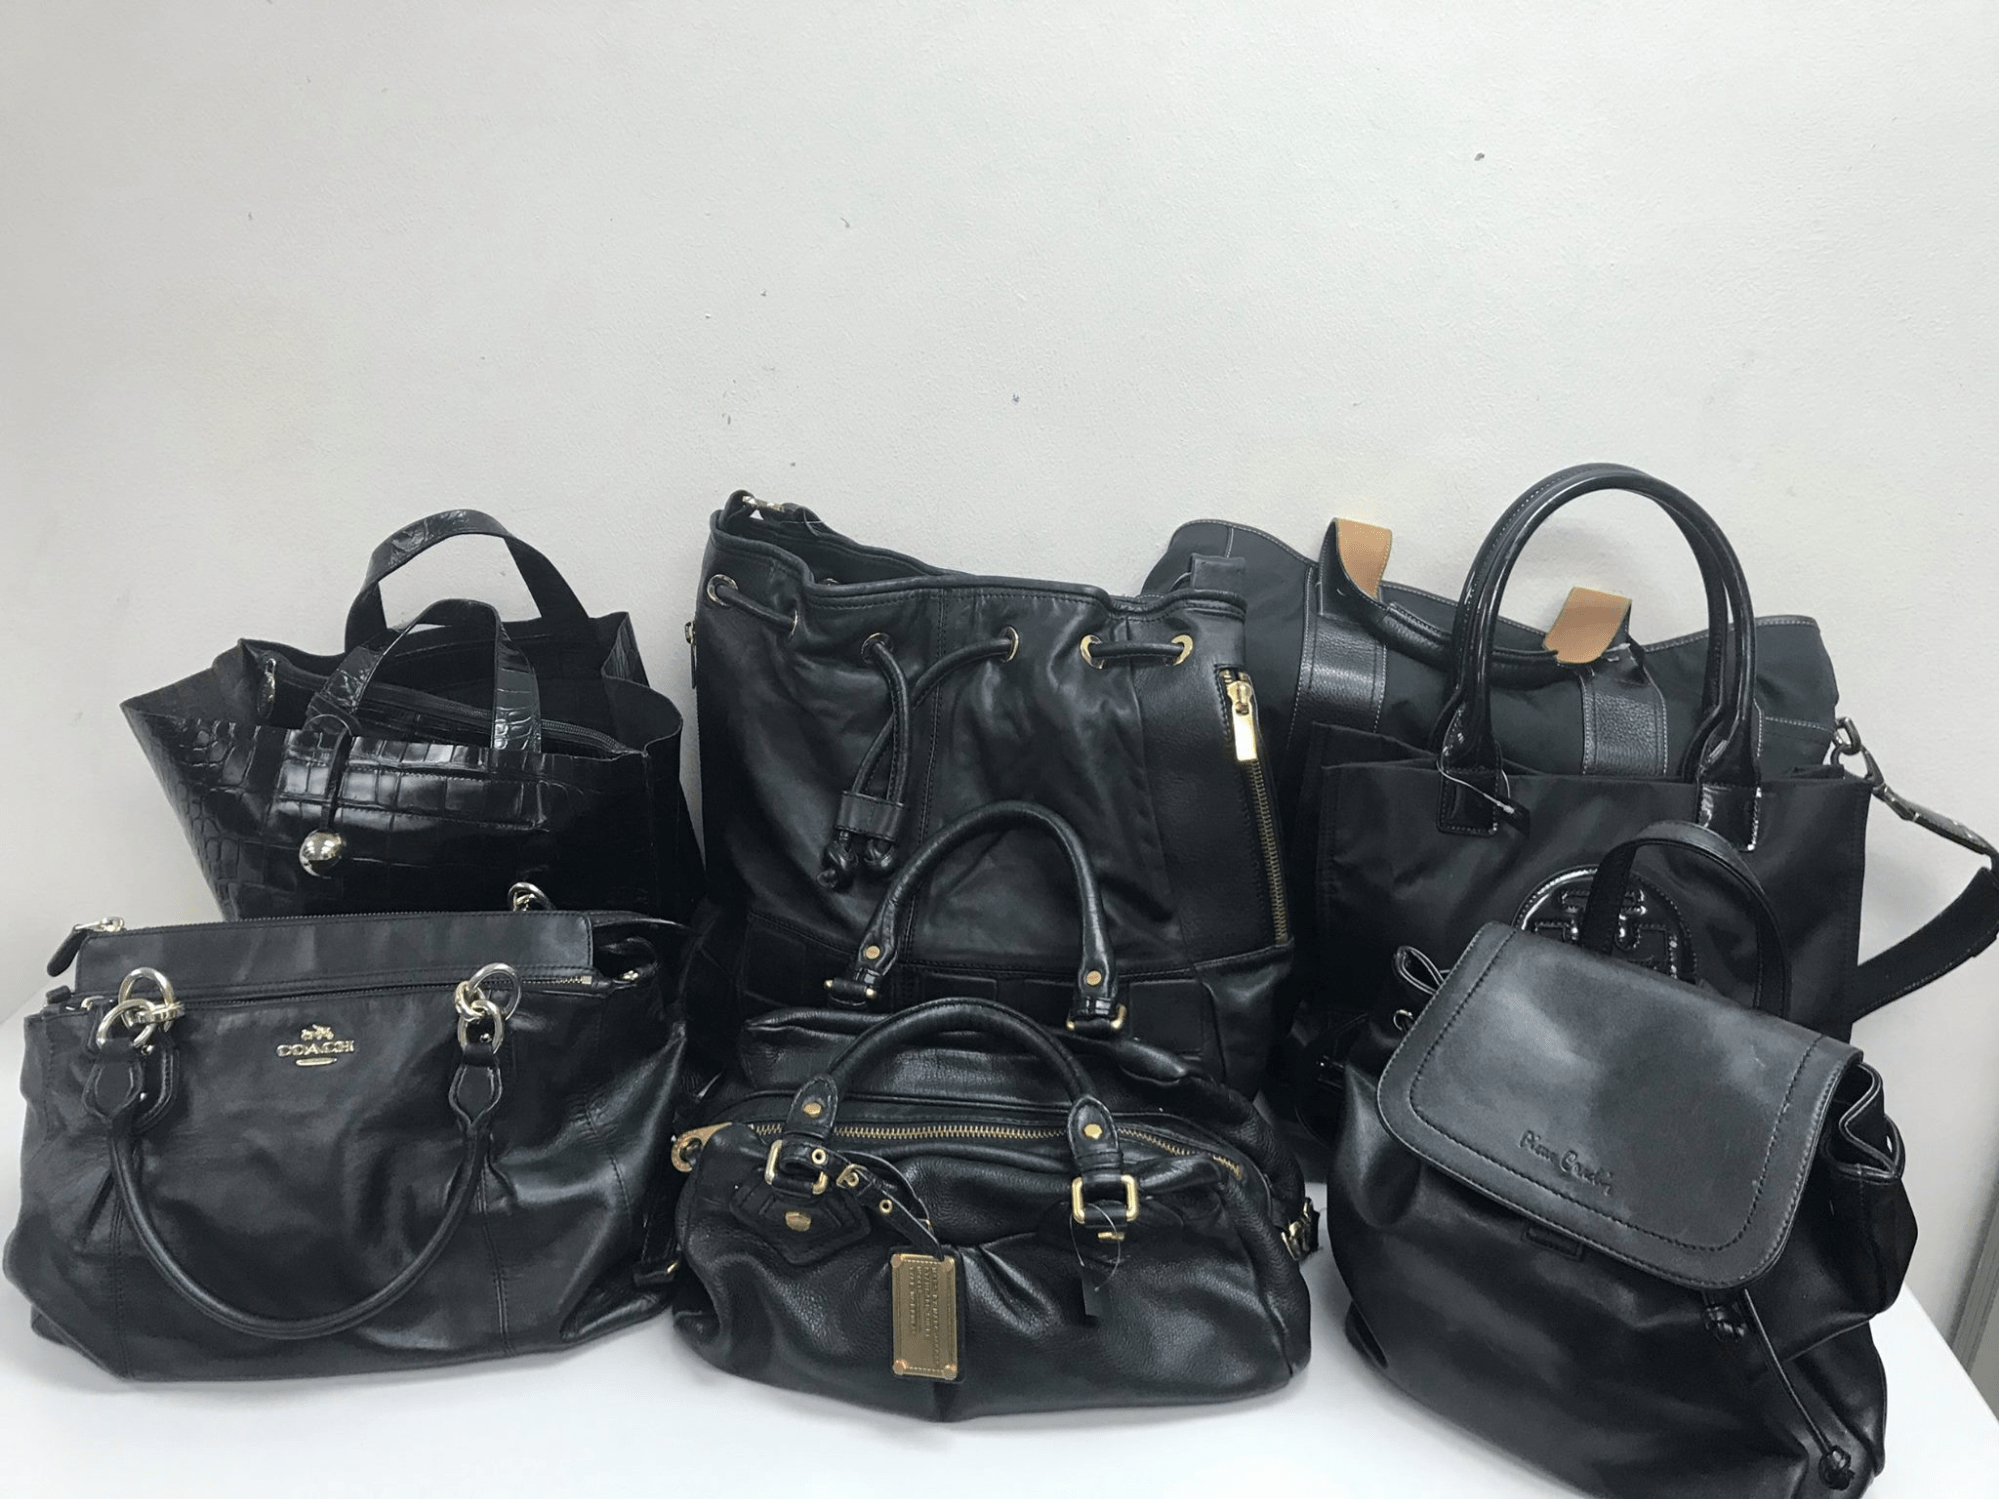 New2U - Designer bags